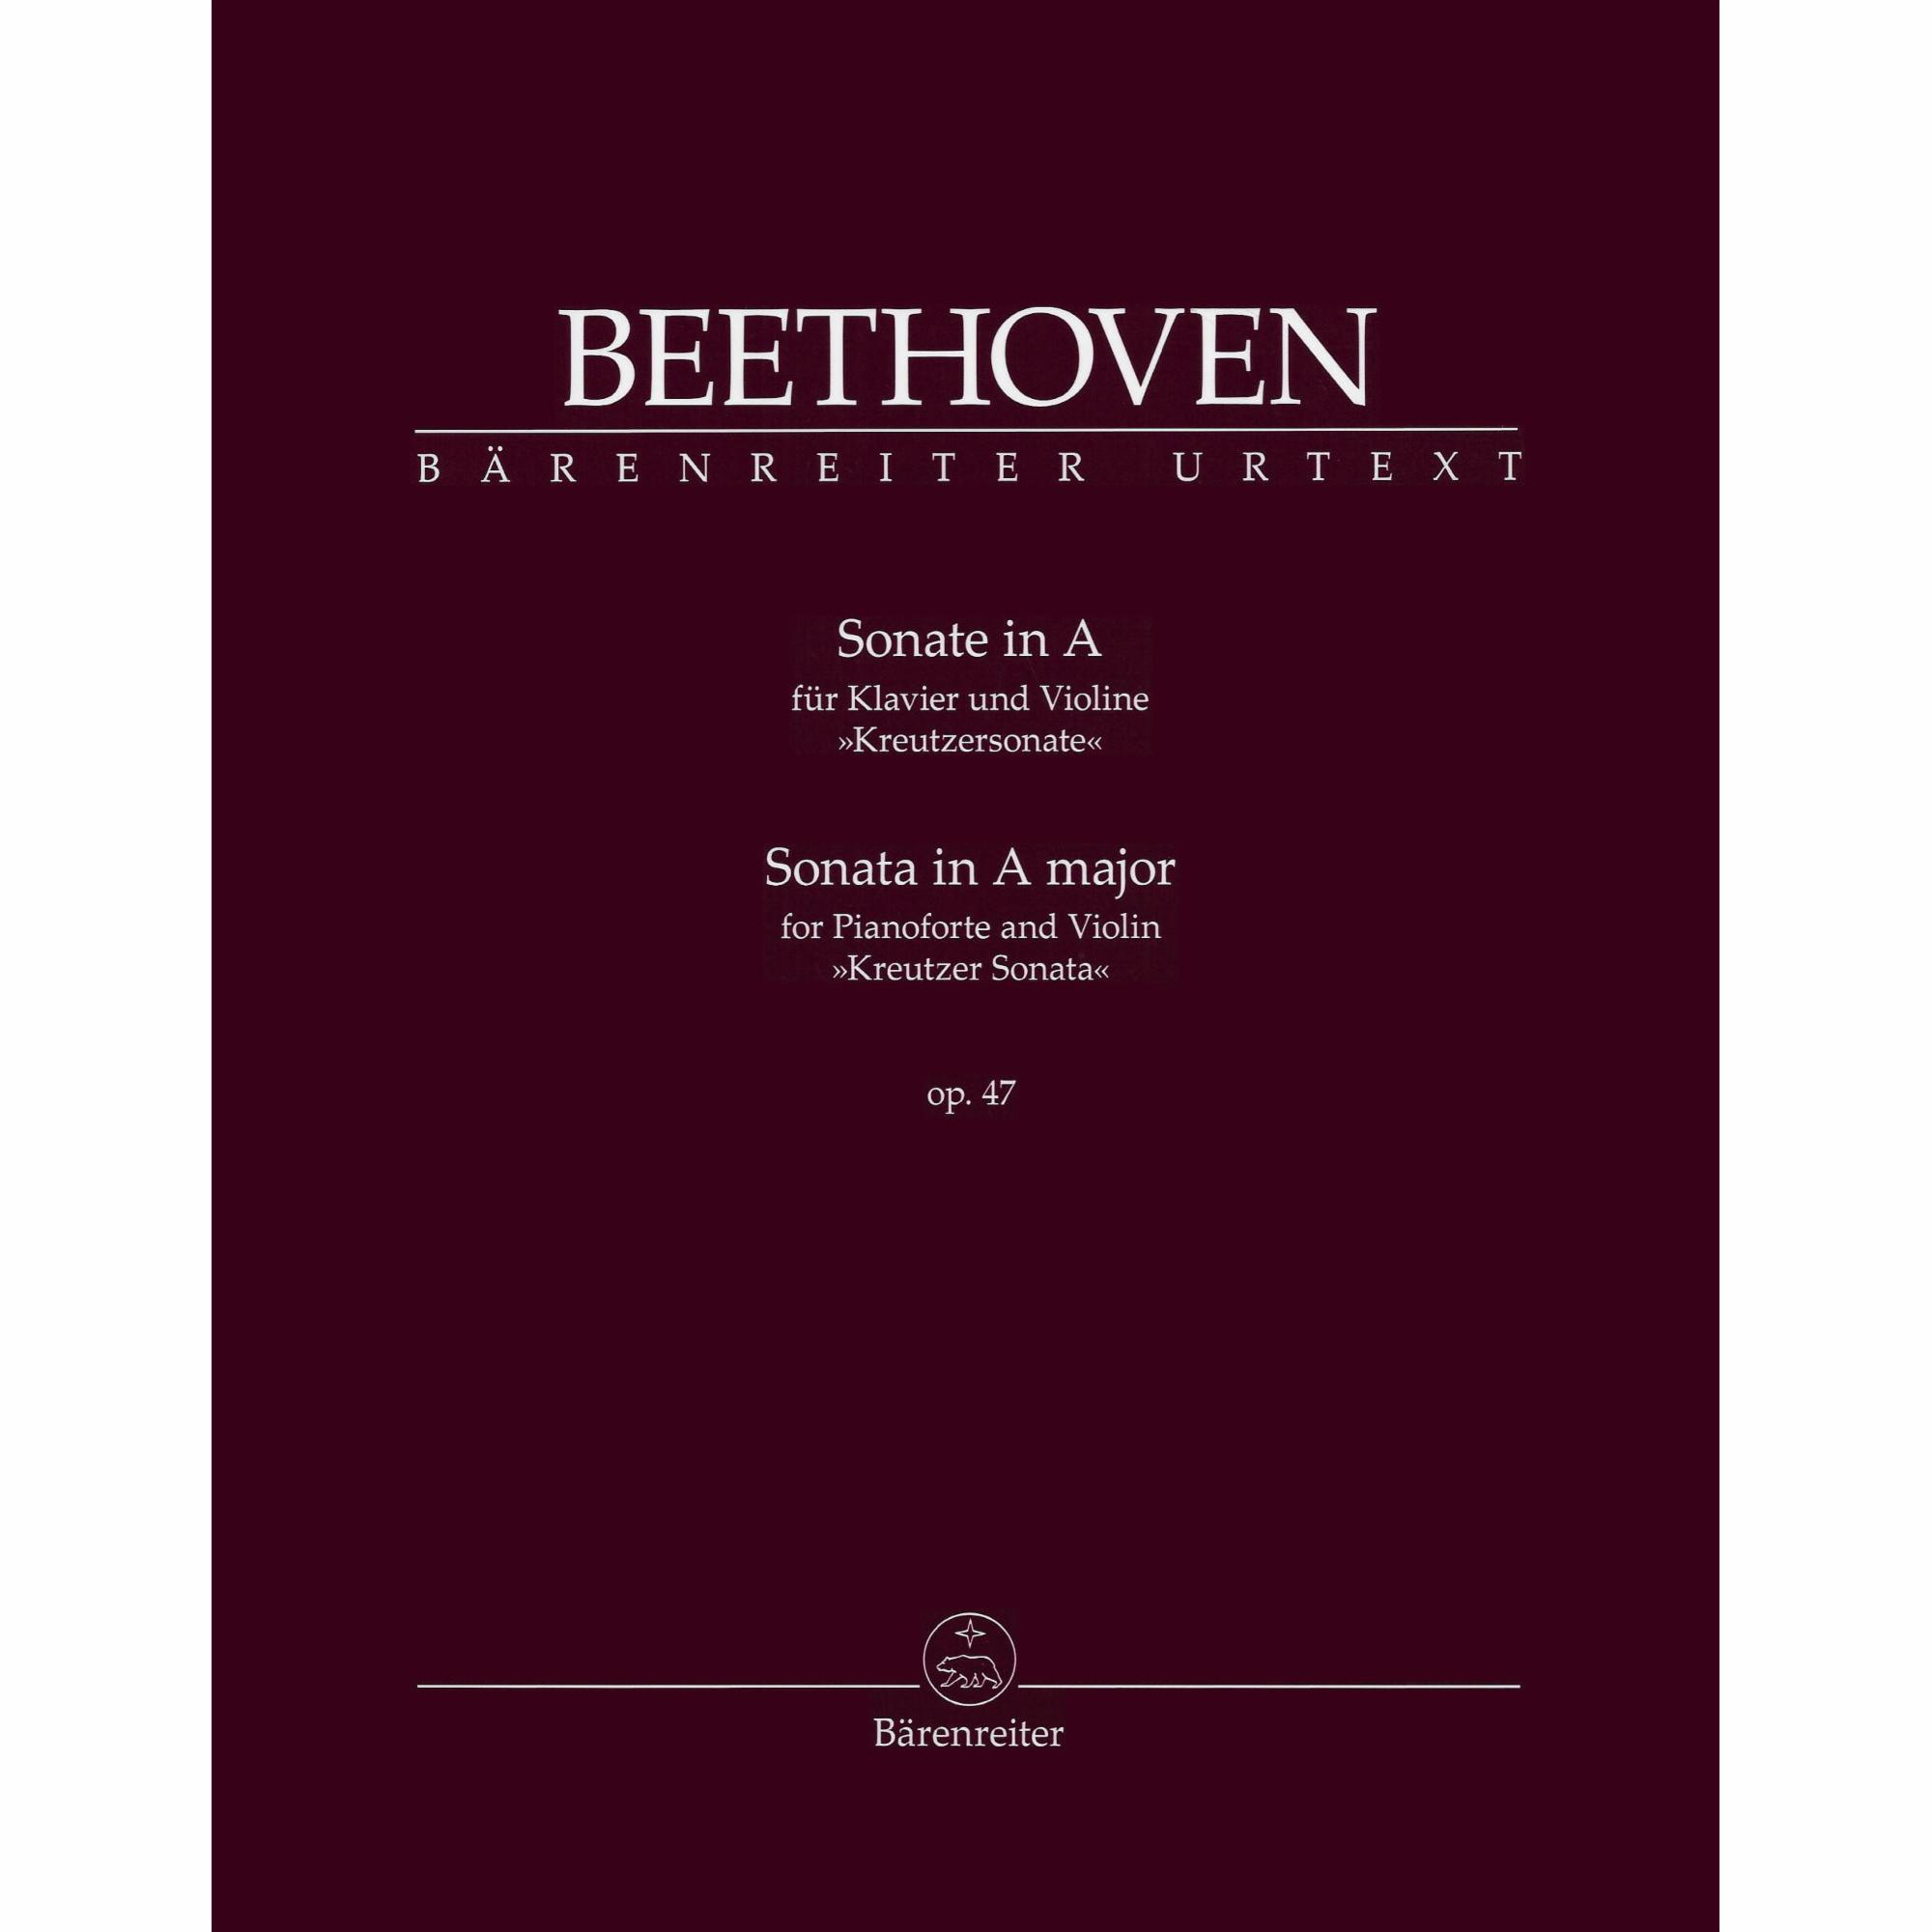 Beethoven -- Sonata in A Major, Op. 47 (Kruetzer Sonata) for Violin and Piano